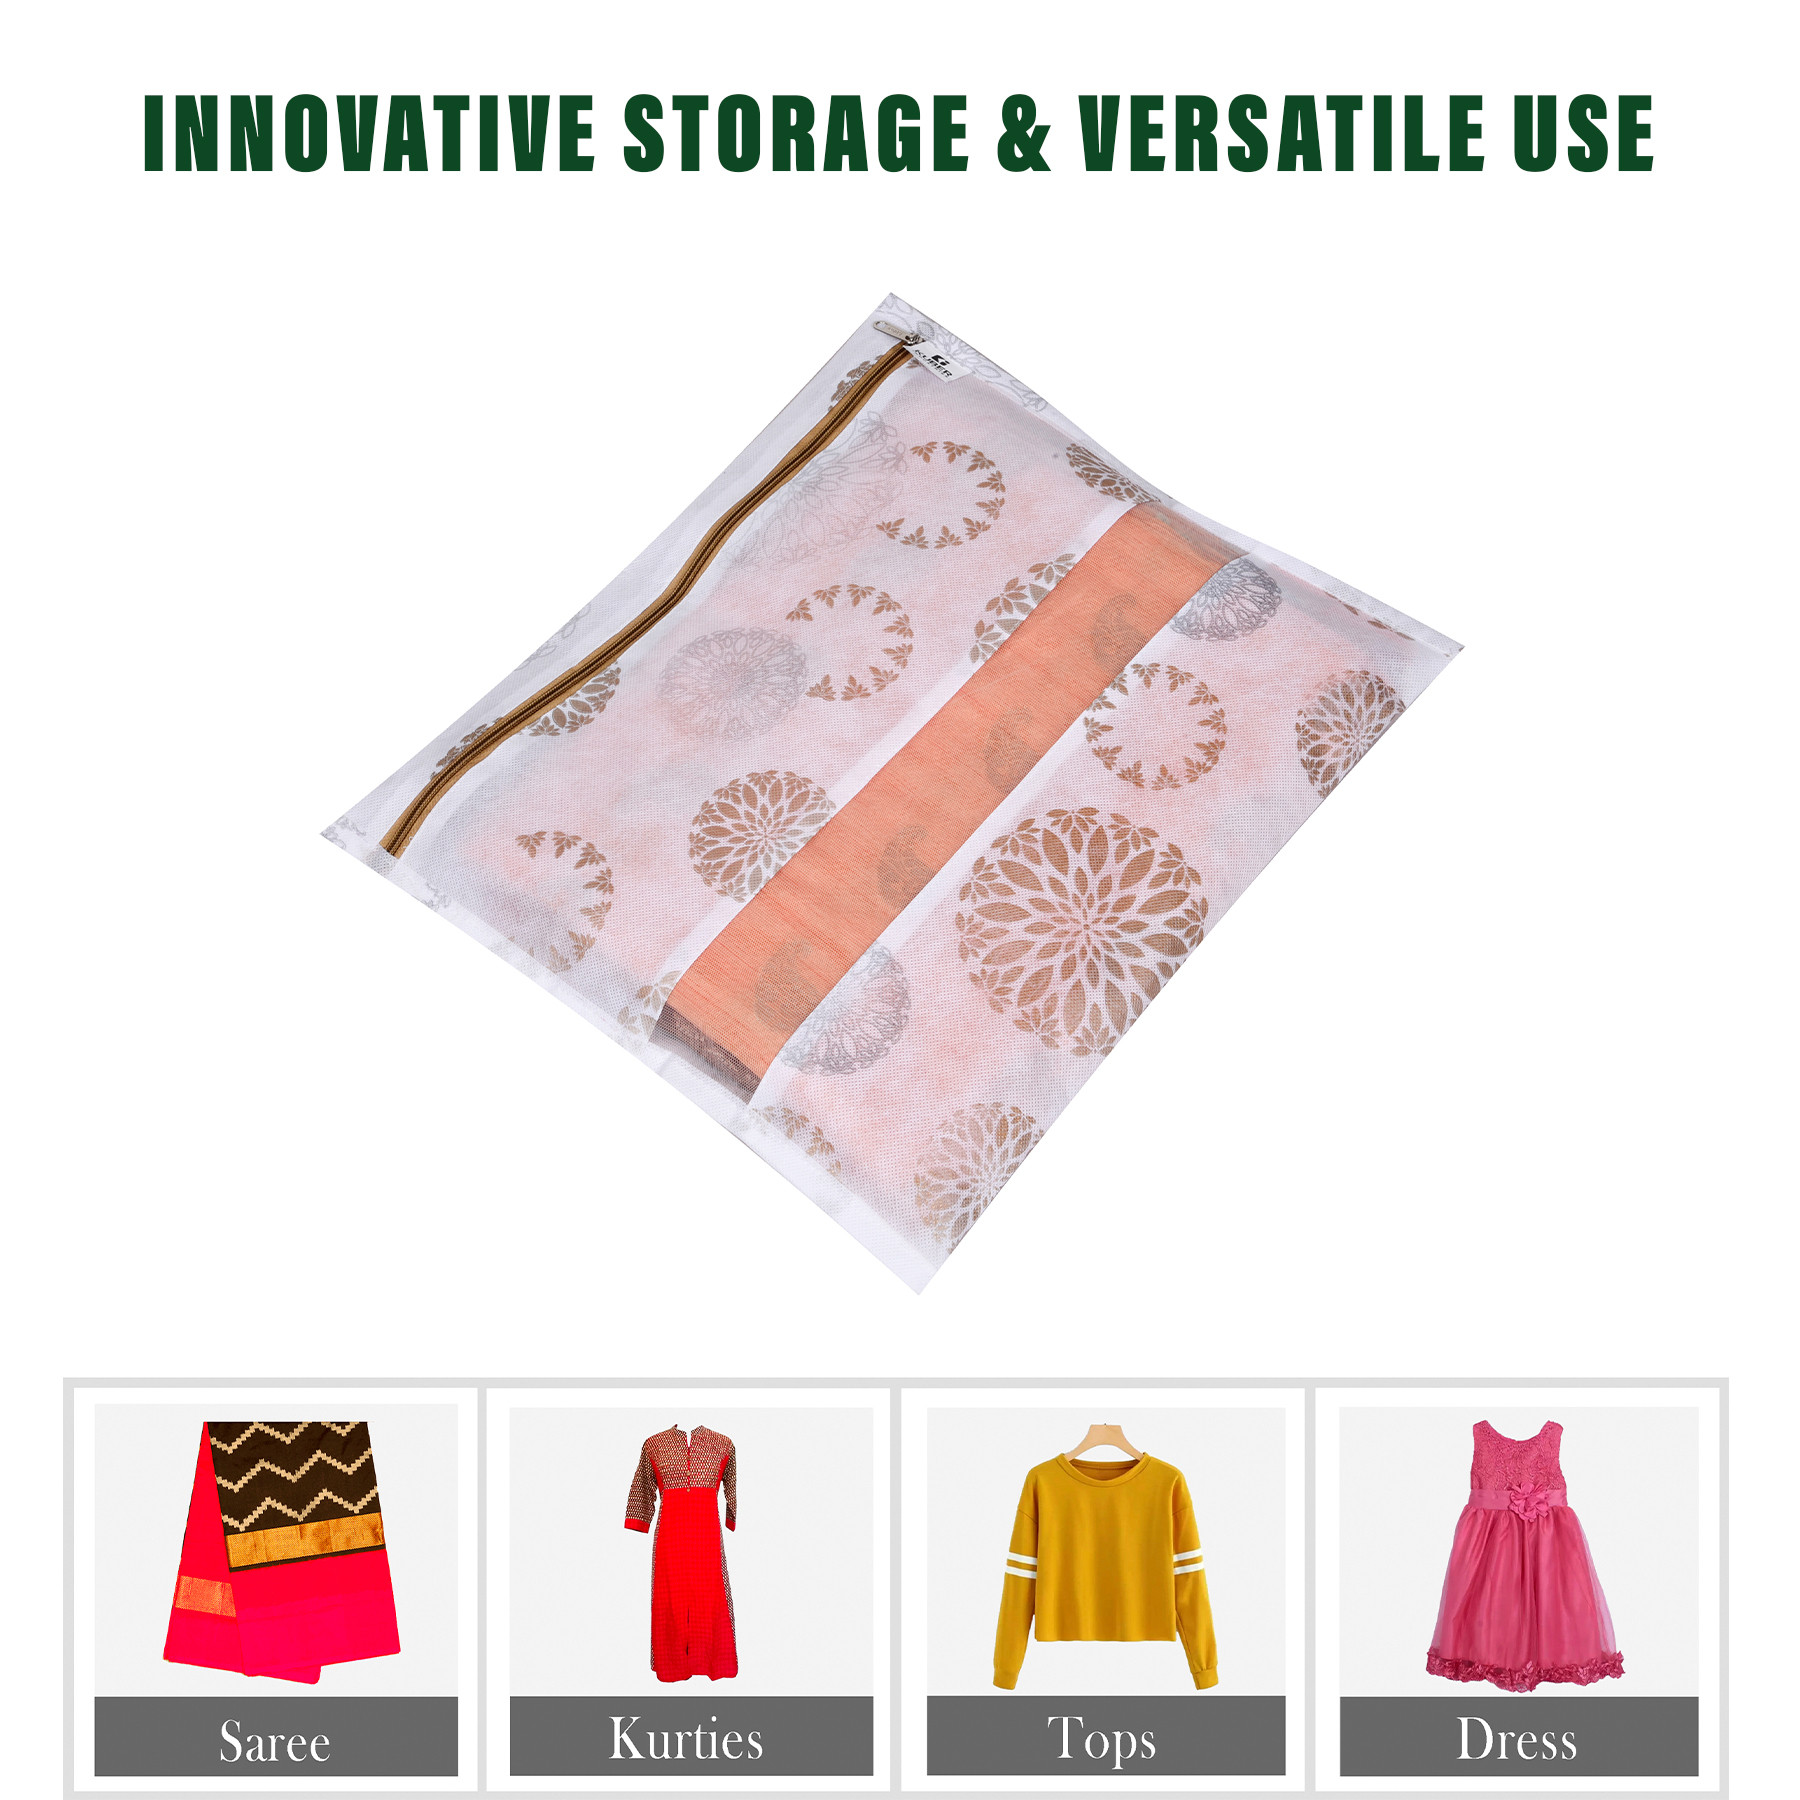 Kuber Industries Saree Bags | Clothes Bags for Storage | Non-Woven Wardrobe Organizer | Mesh Window Cloth Storage Bags Set | Single Packing Saree Bags | Printed | Gray & White